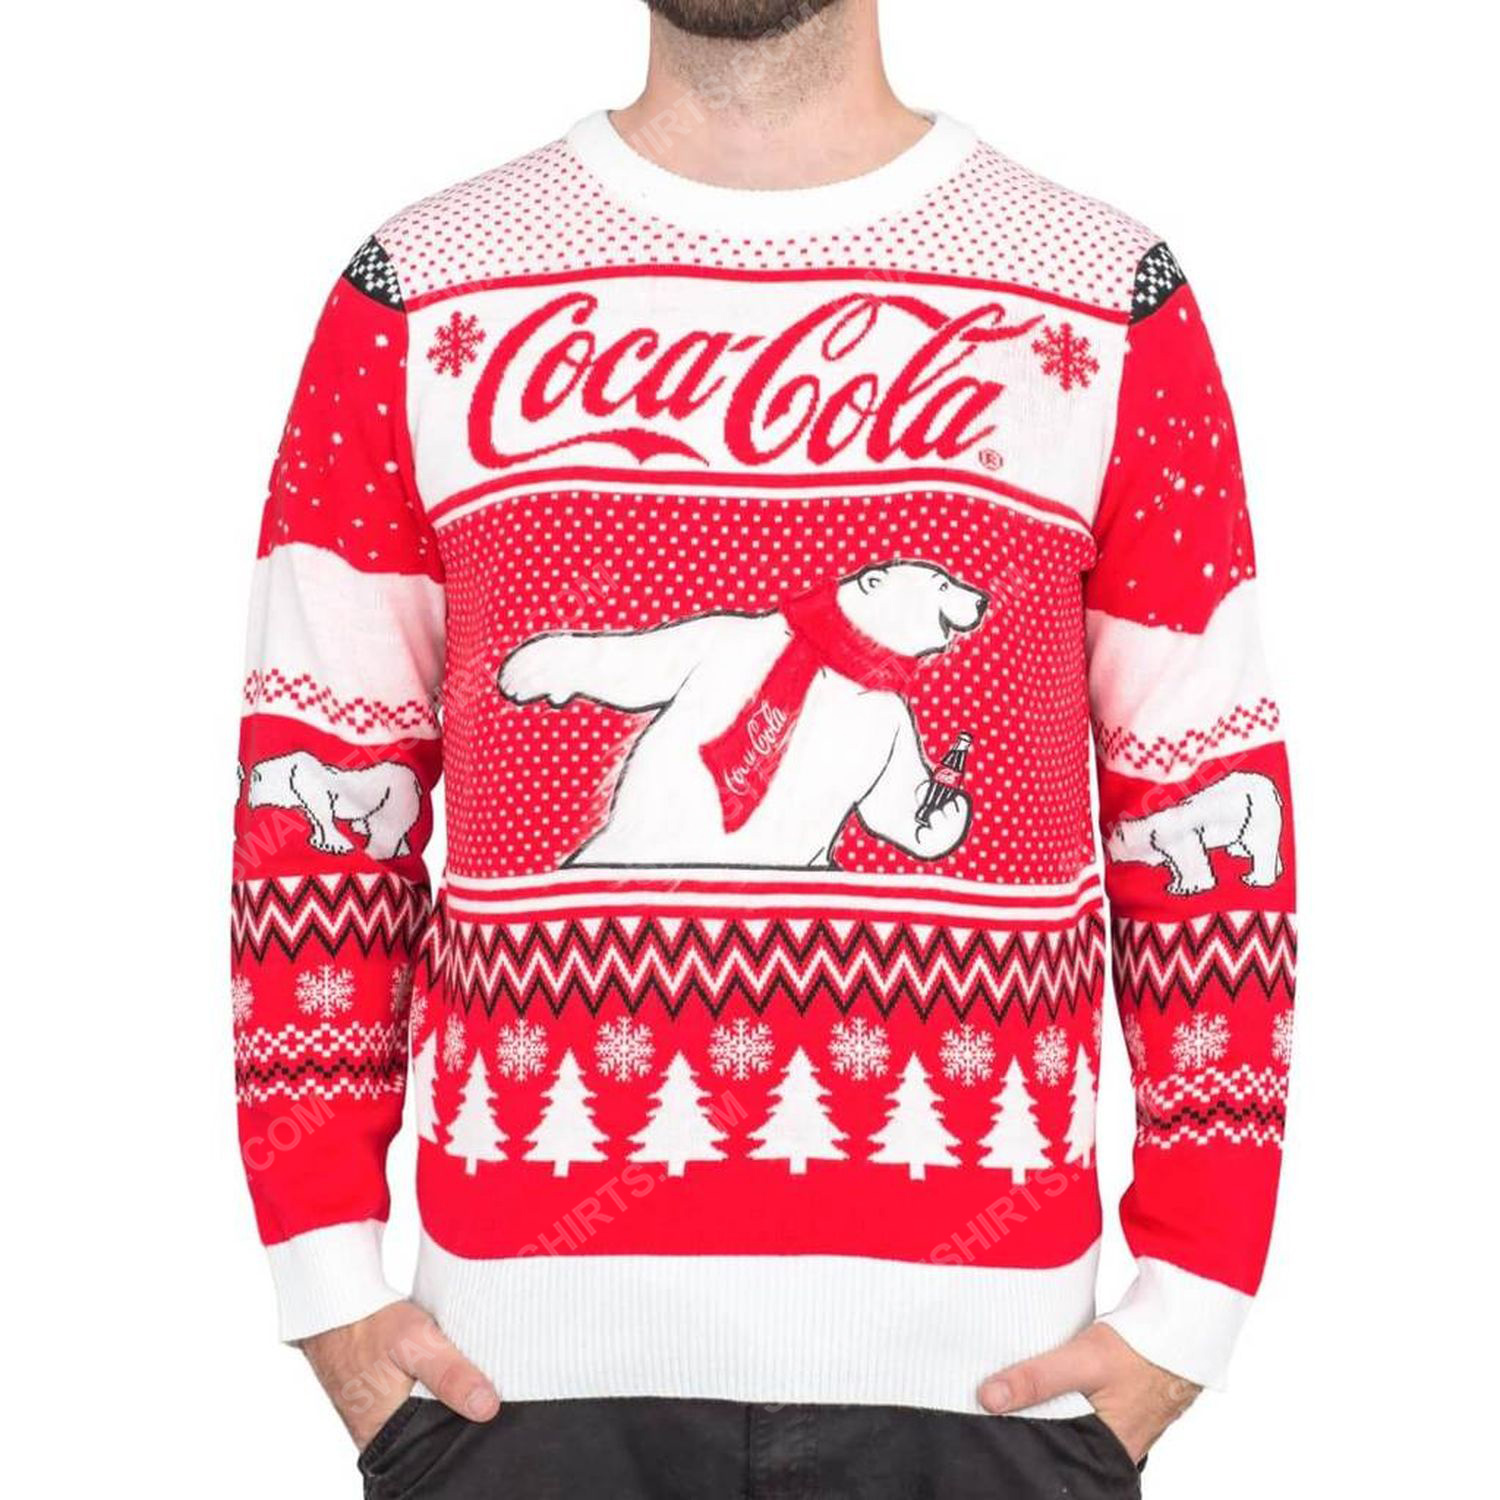 Coca-cola polar bear coke full print ugly christmas sweater 2 - Copy